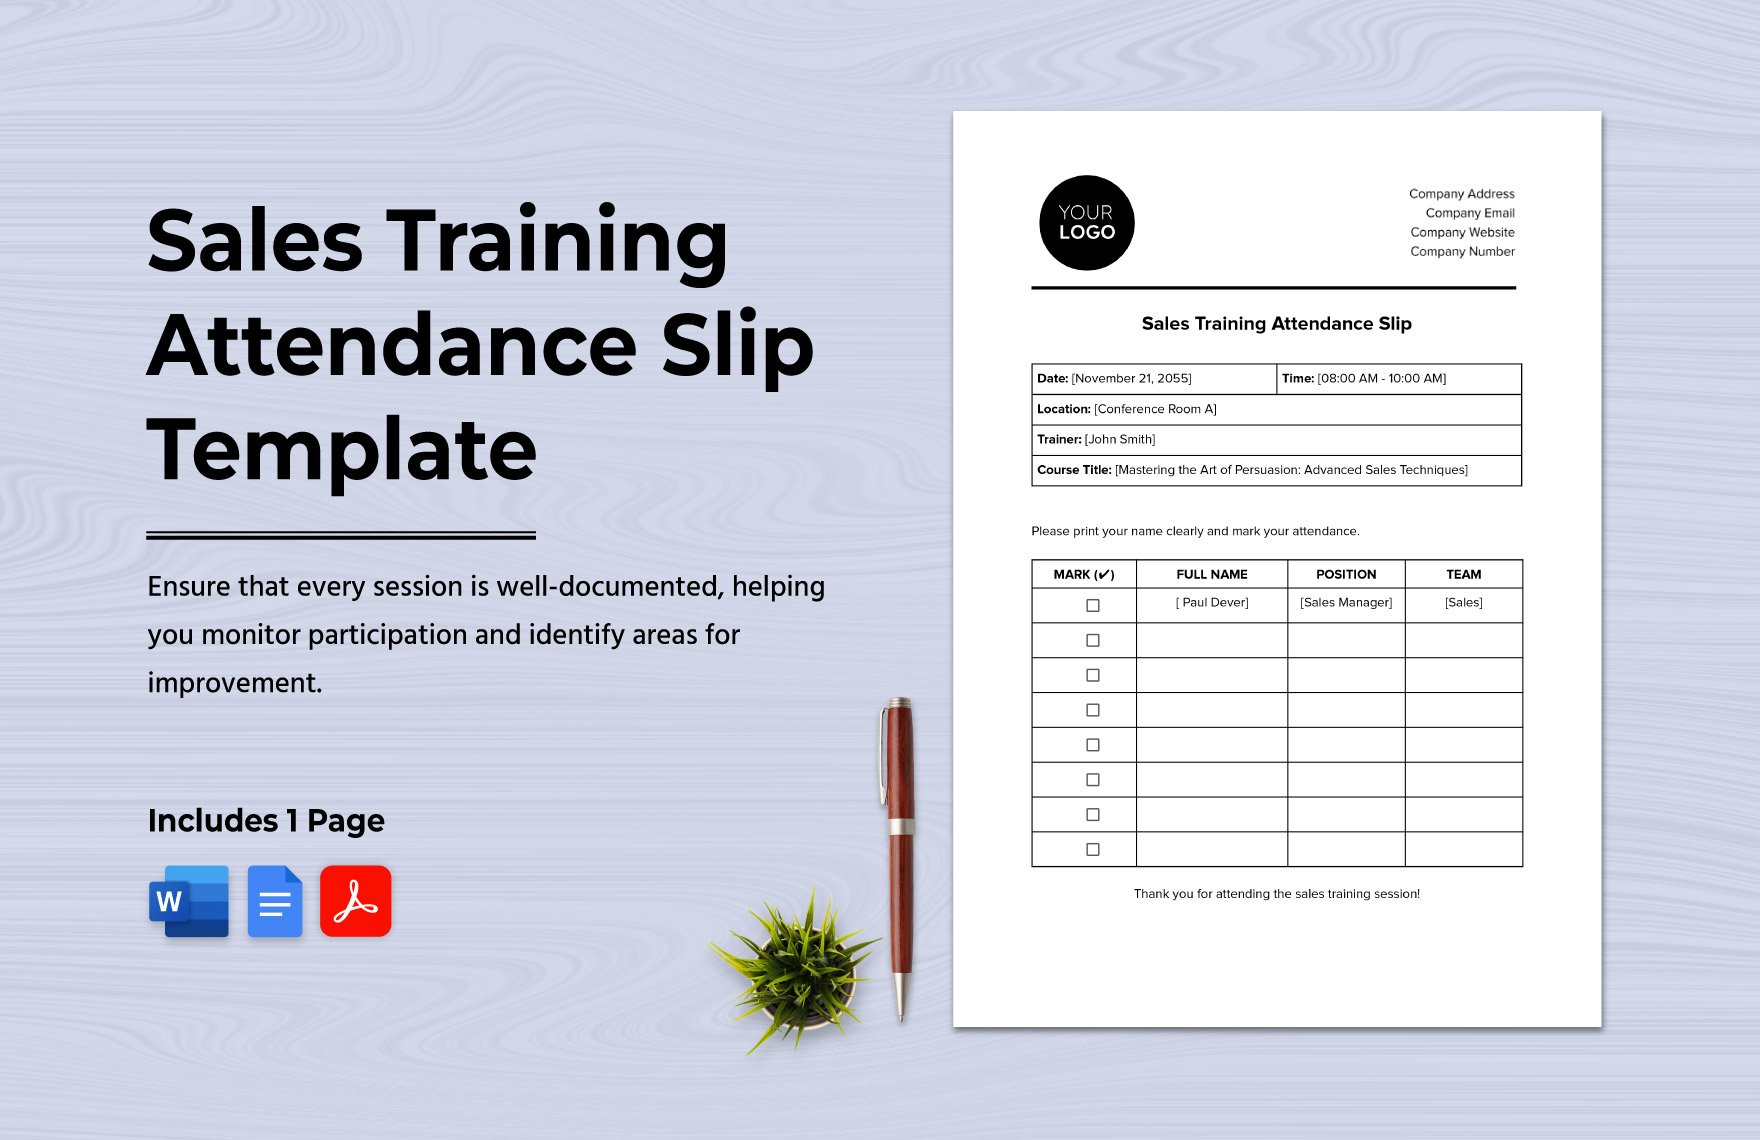 Sales Training Attendance Slip Template in Word, Google Docs, PDF